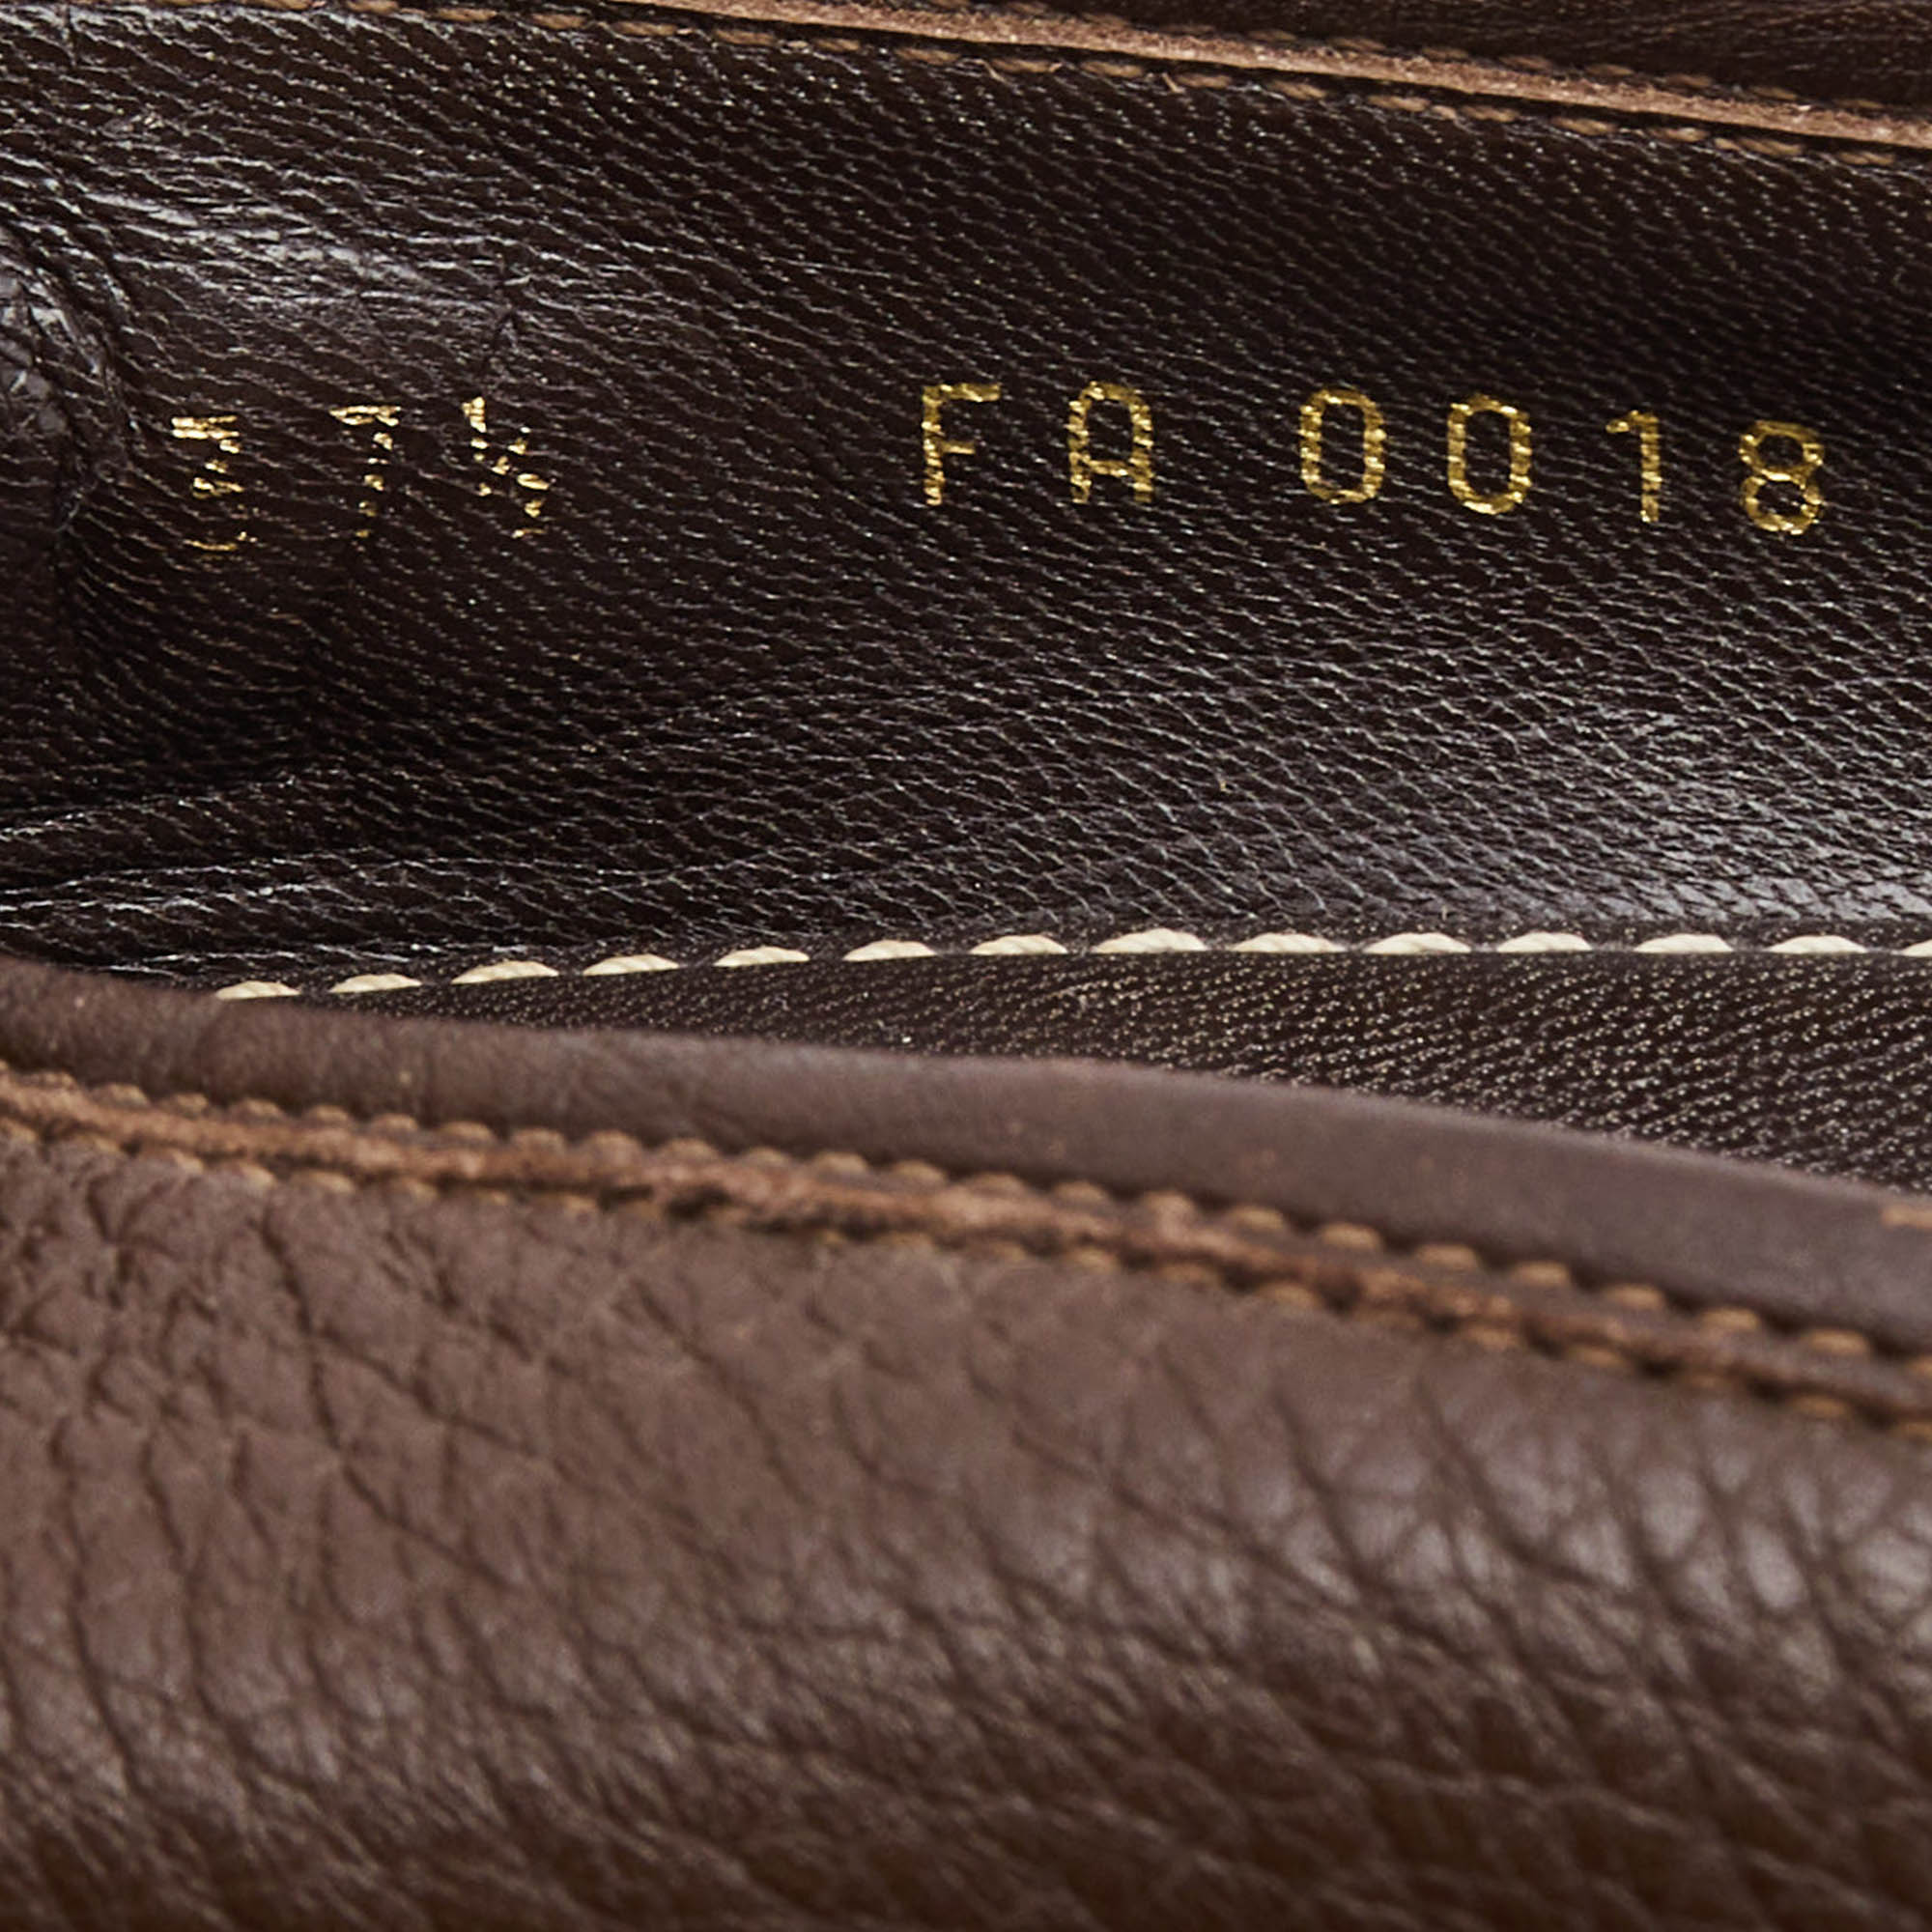 Louis Vuitton Brown Leather LV Buckle Ballet Flats Size 37.5